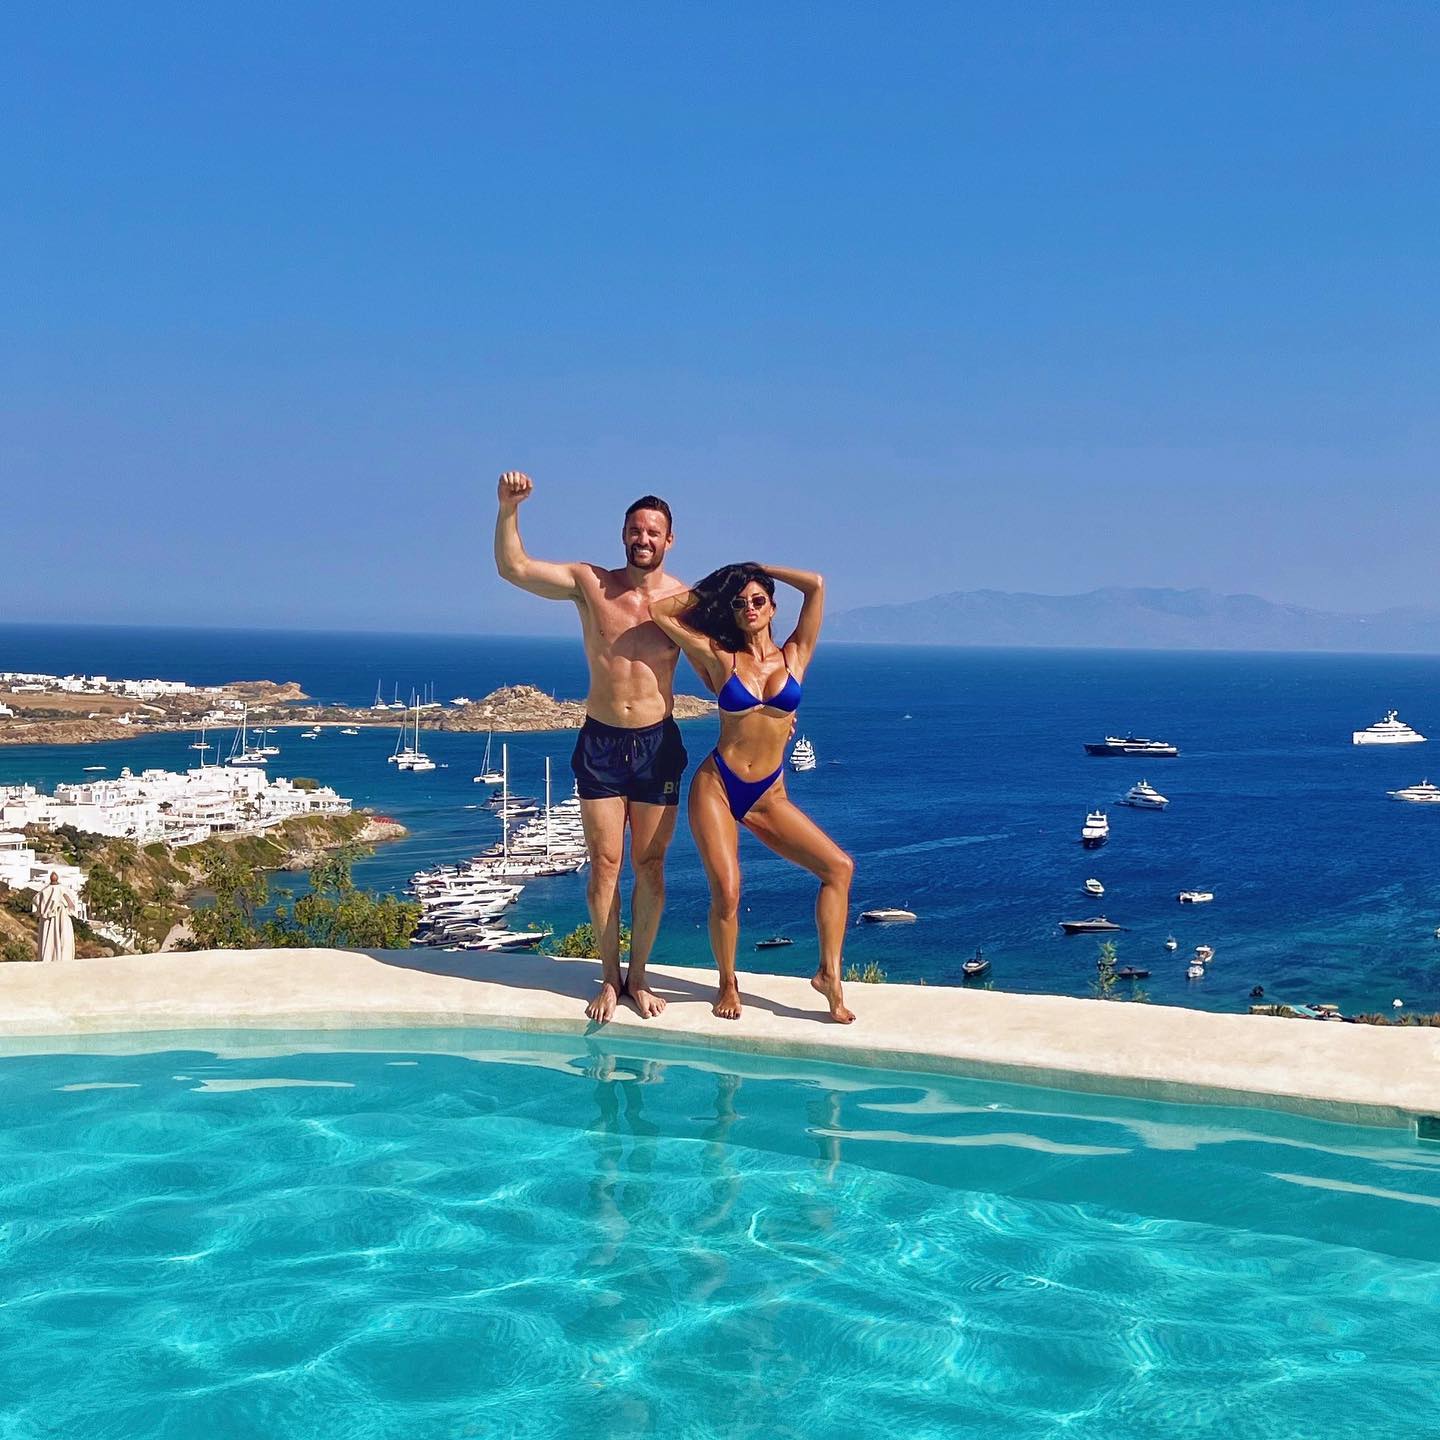 Photos n°8 : Nicole Scherzinger Celebrates The Fourth in Greece!